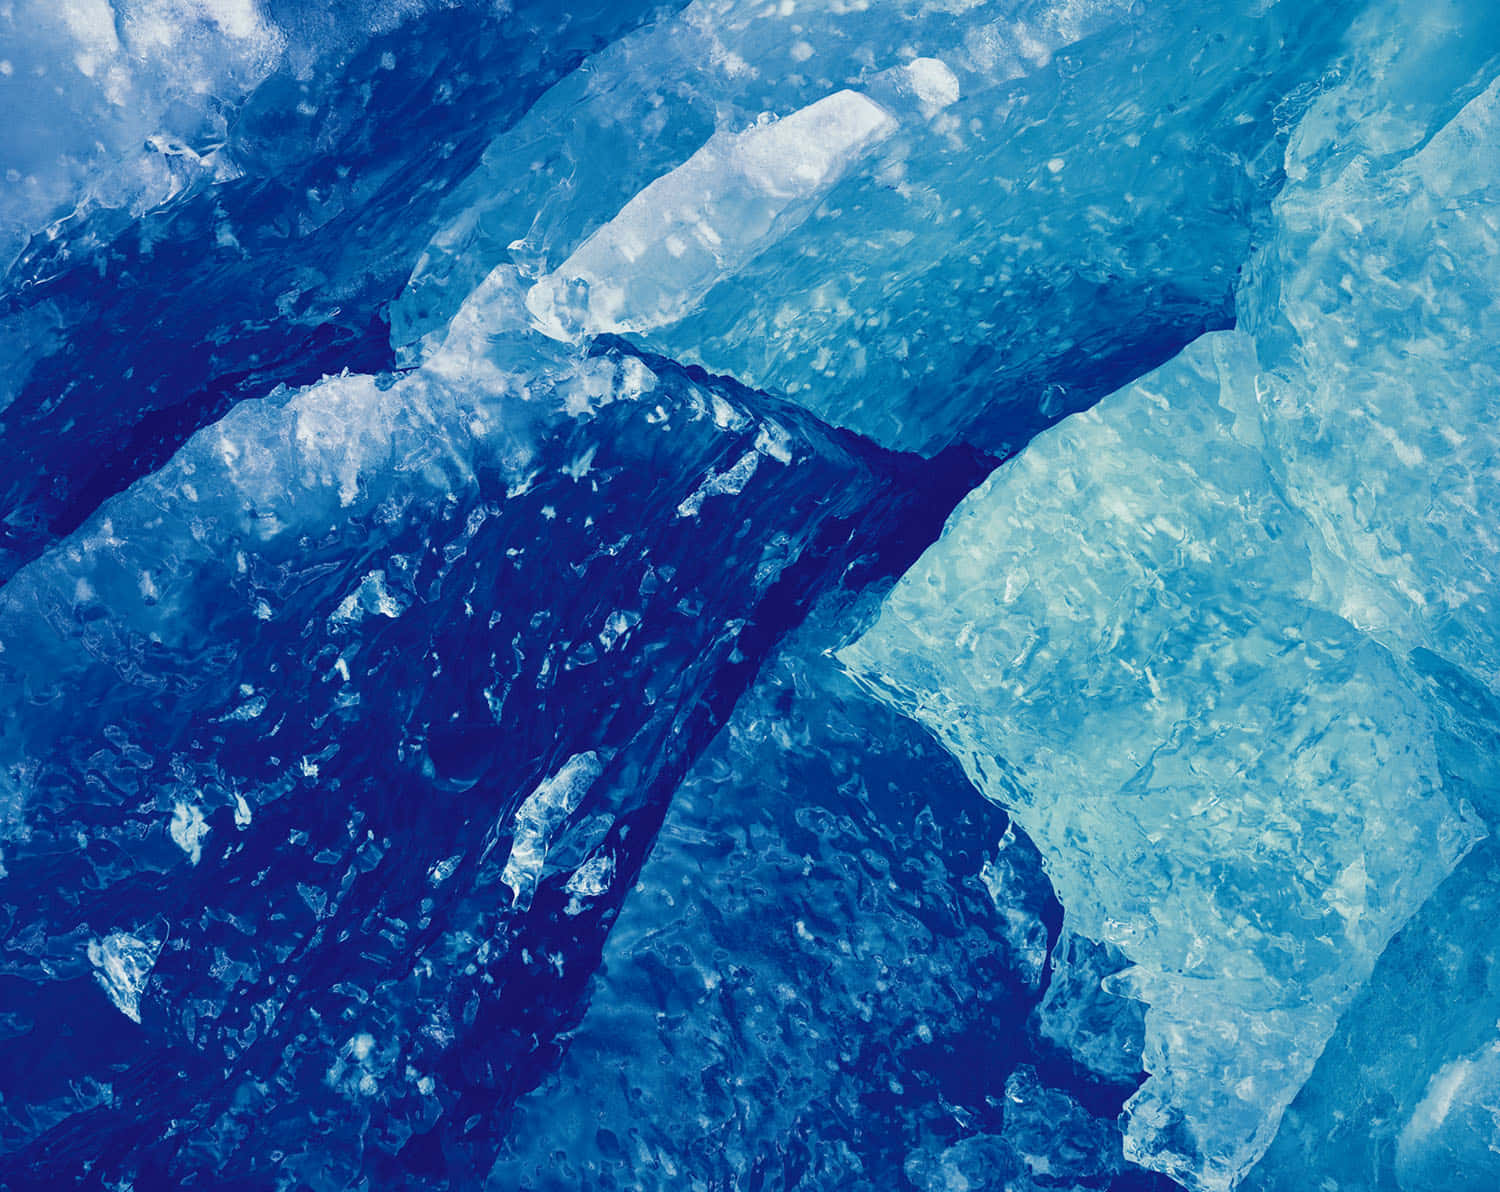 Ethereal beauty of an ice blue winter wonderland. Wallpaper